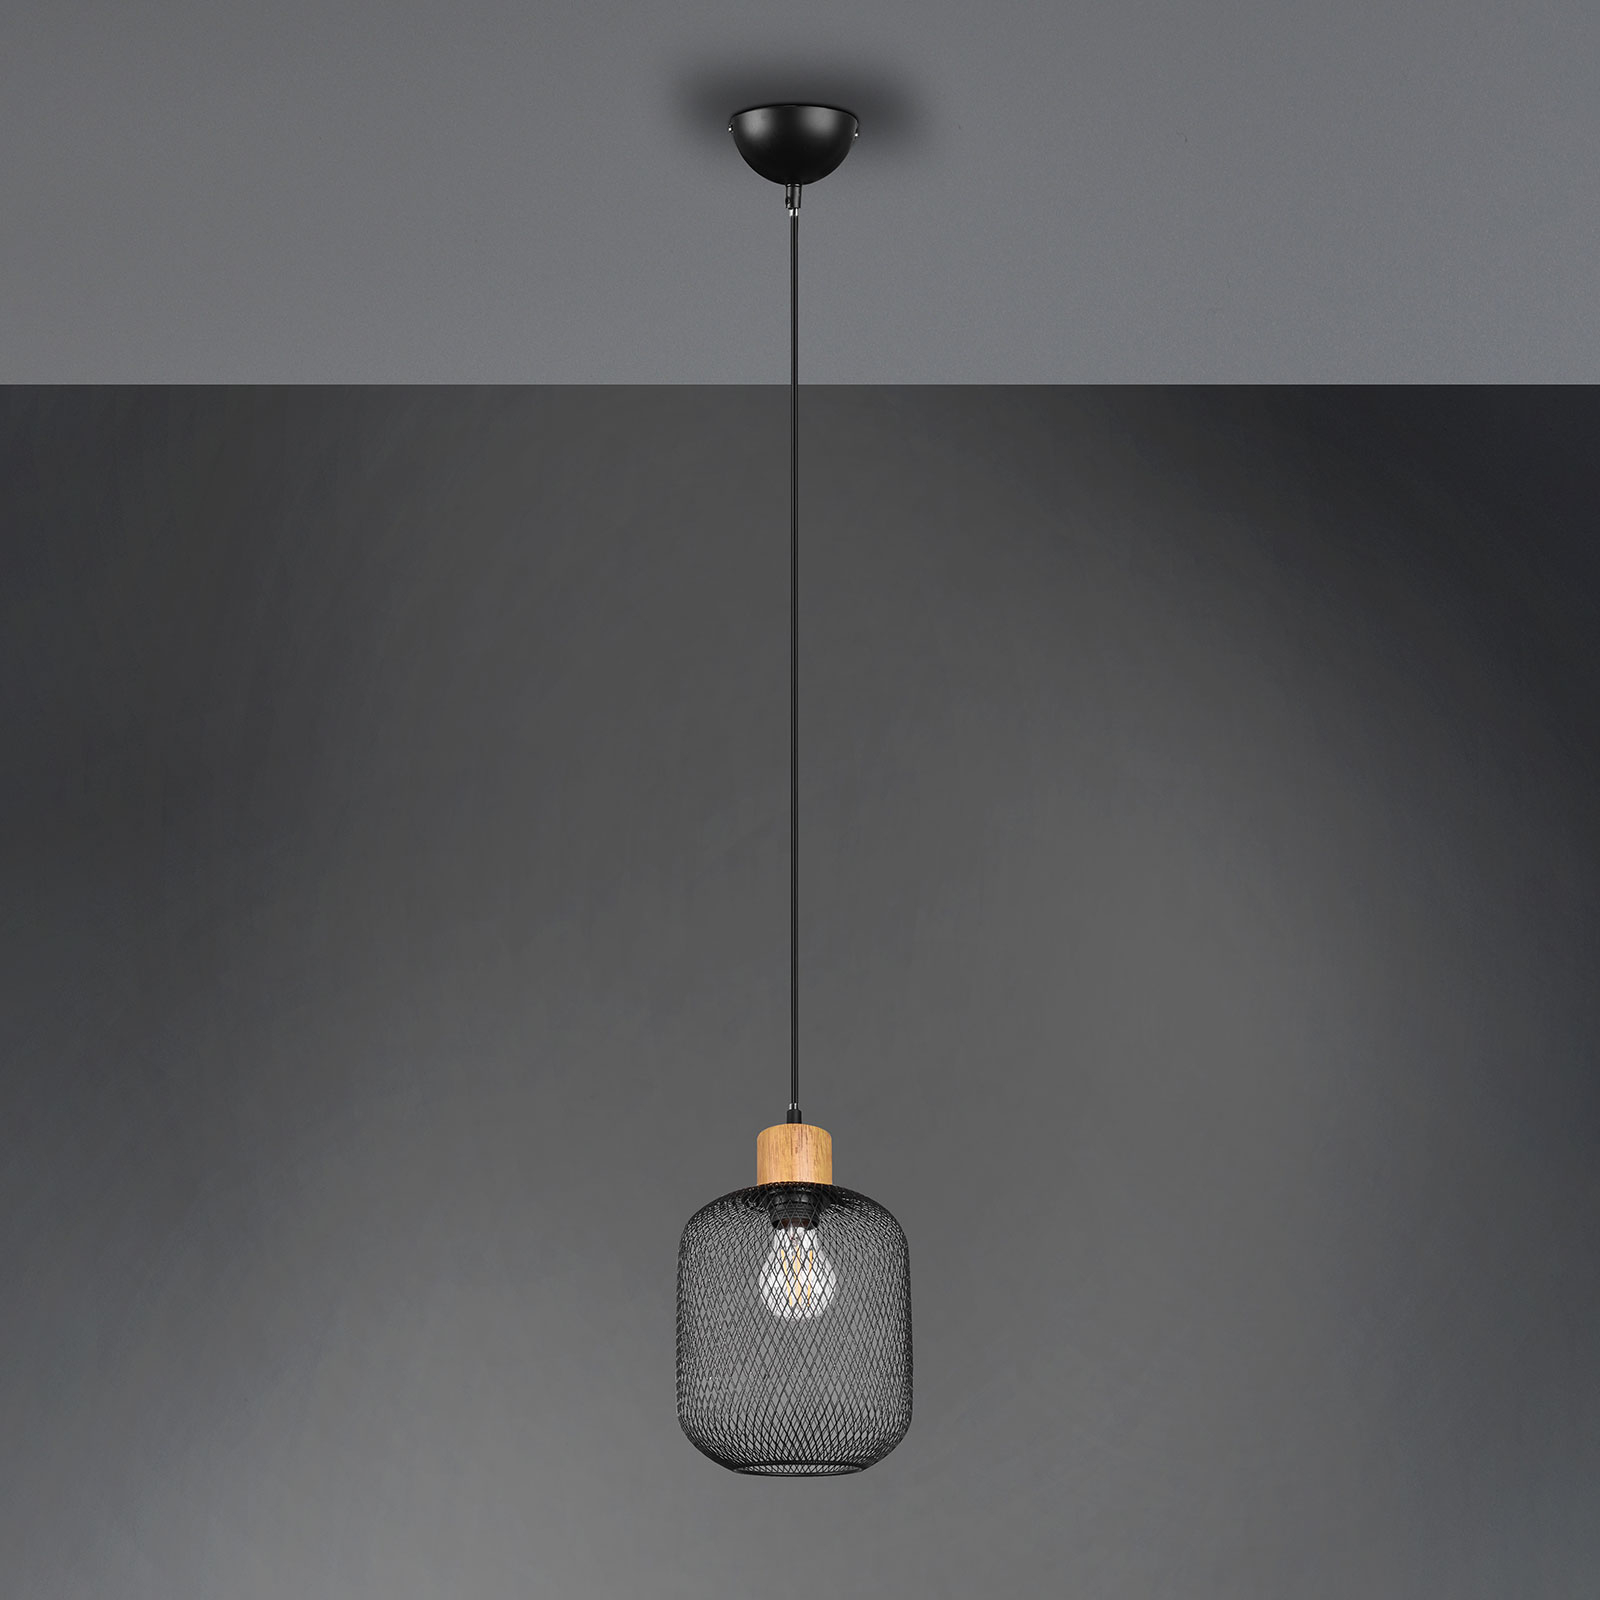 Hanglamp Calimero kooi-look 1-lamp Ø 18 cm